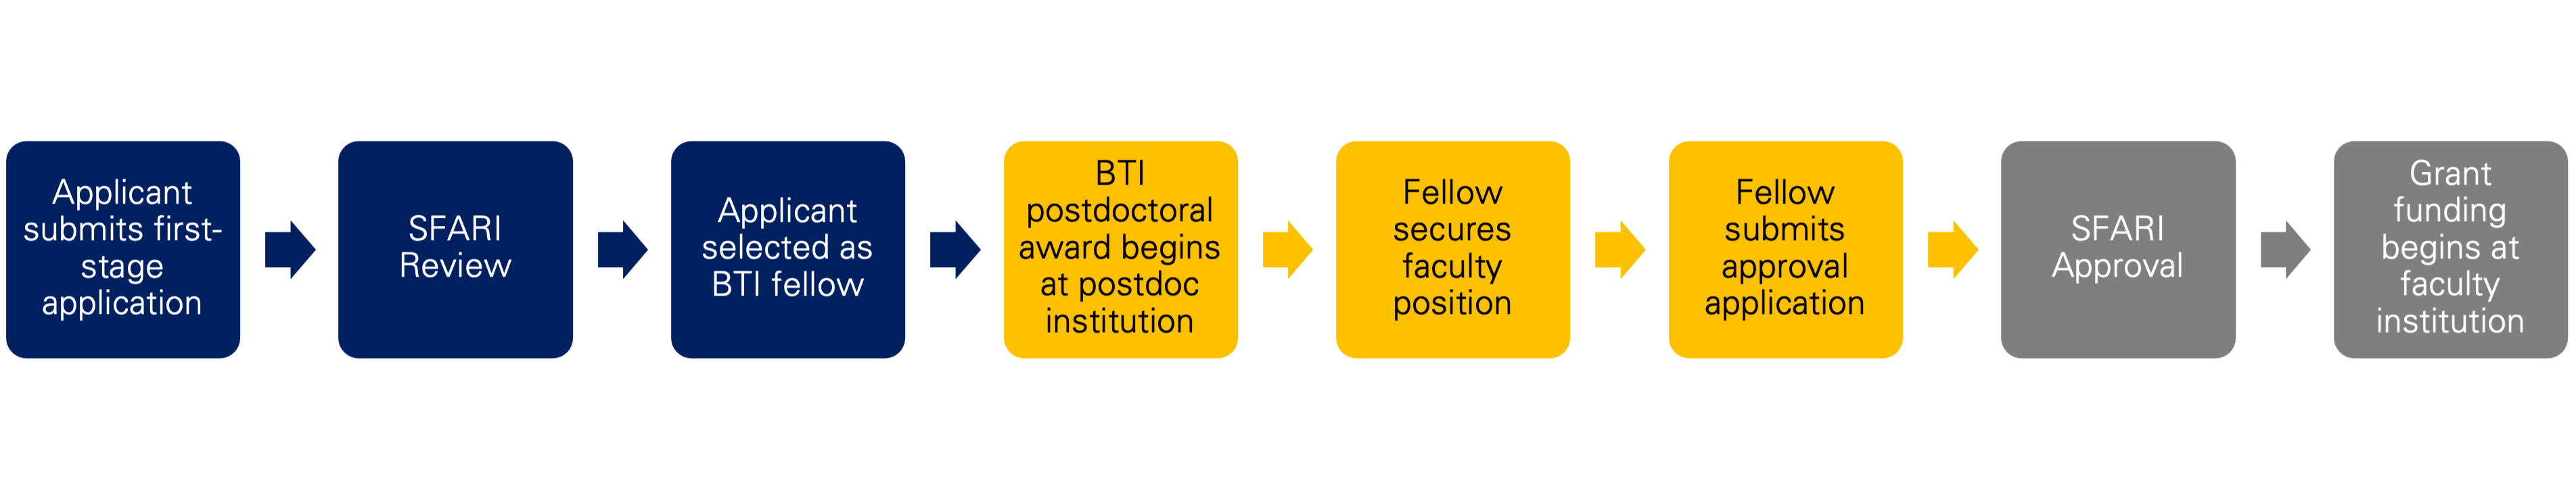 BTI application process diagram